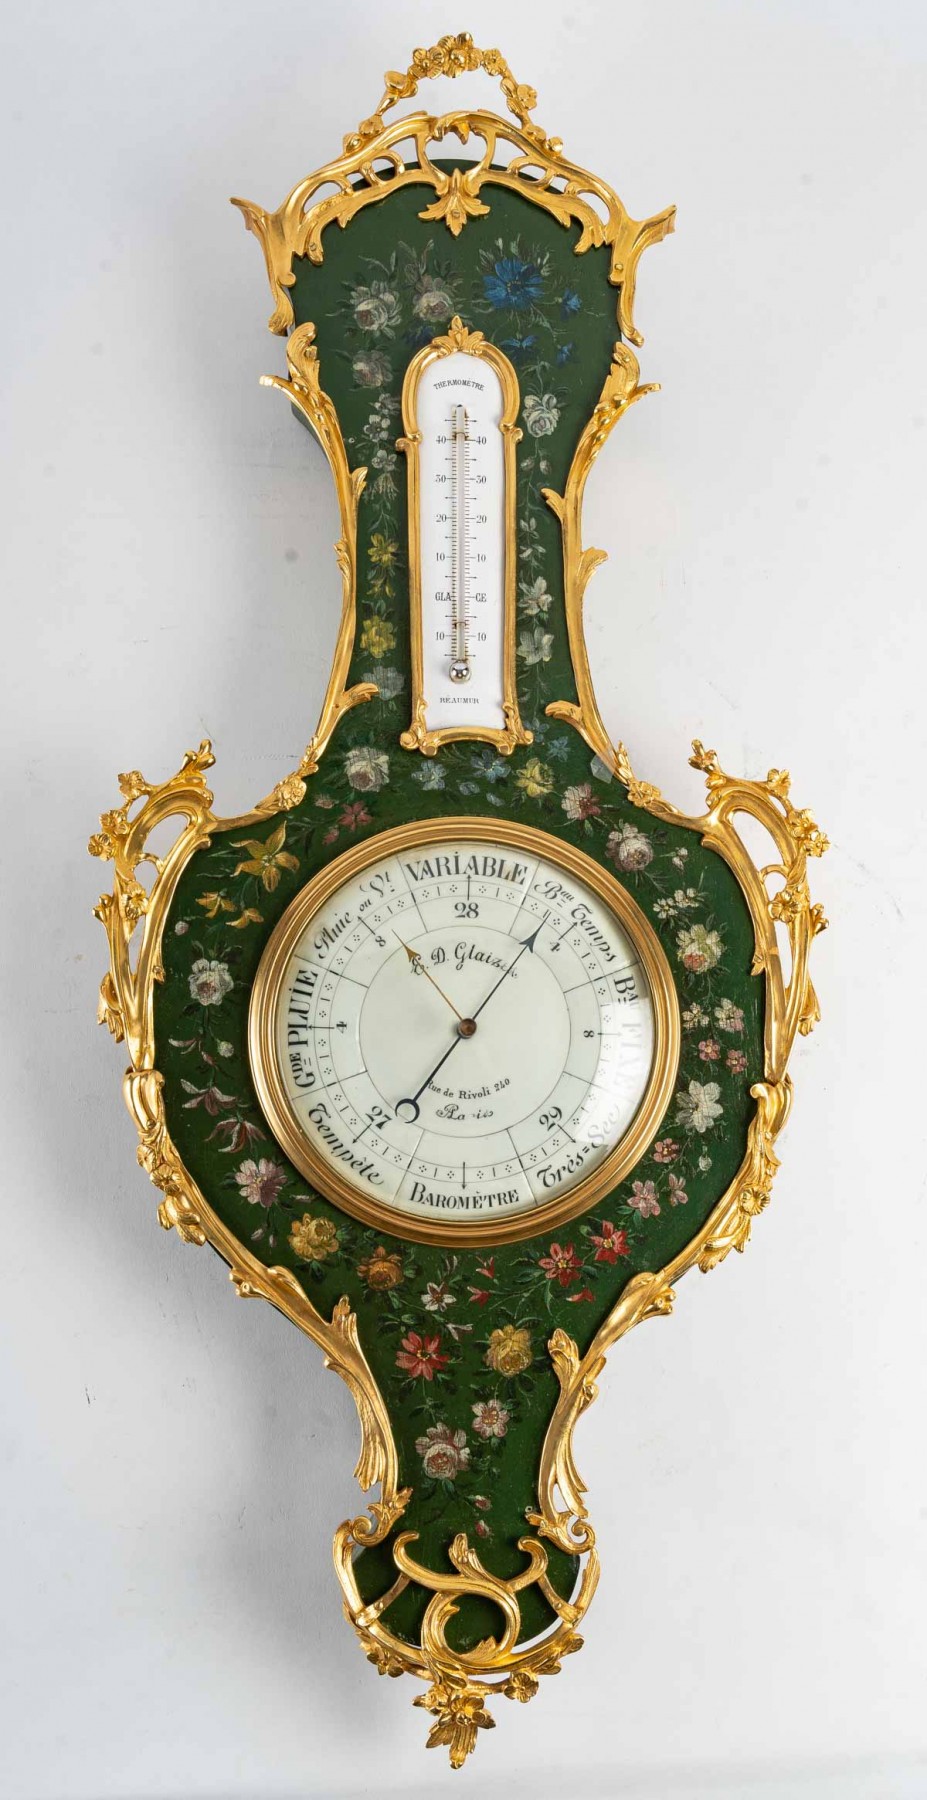 Baromètre - thermomètre d'époque Napoléon III - XIXe siècle - N.89977